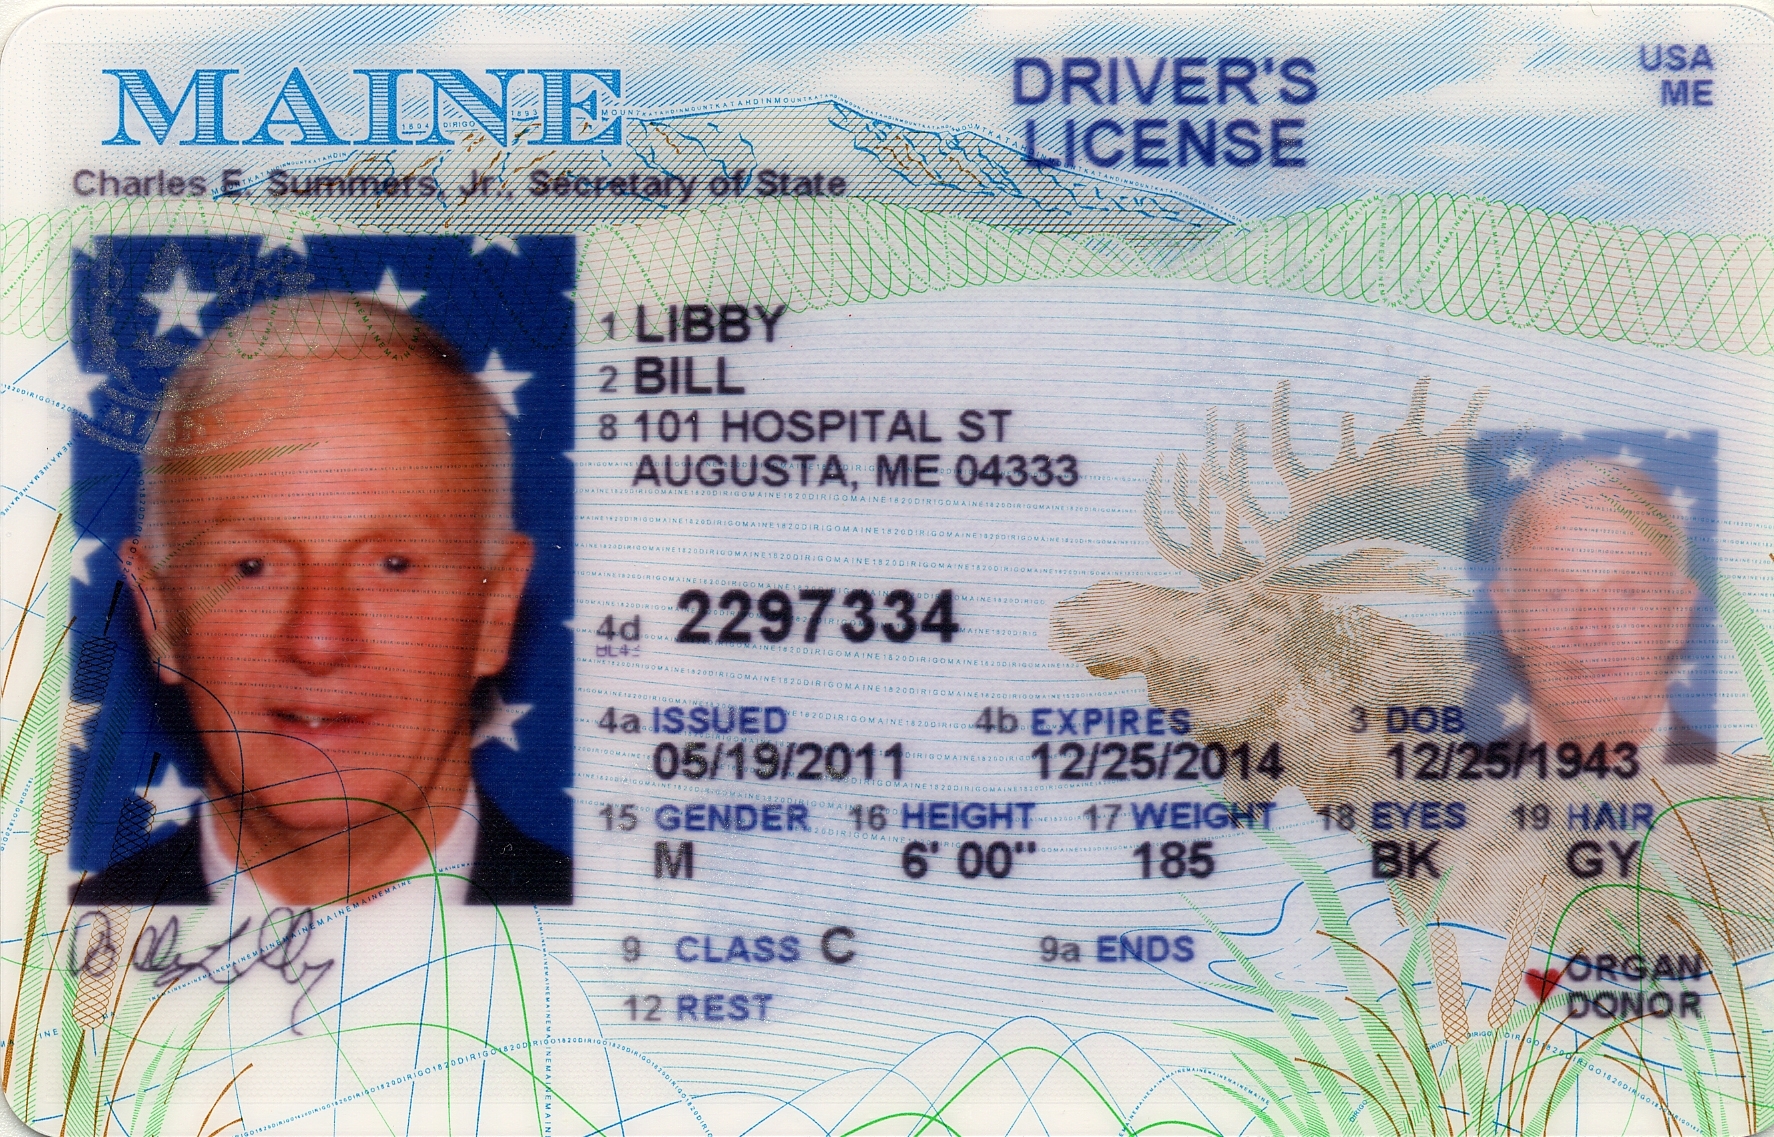 sample military license image